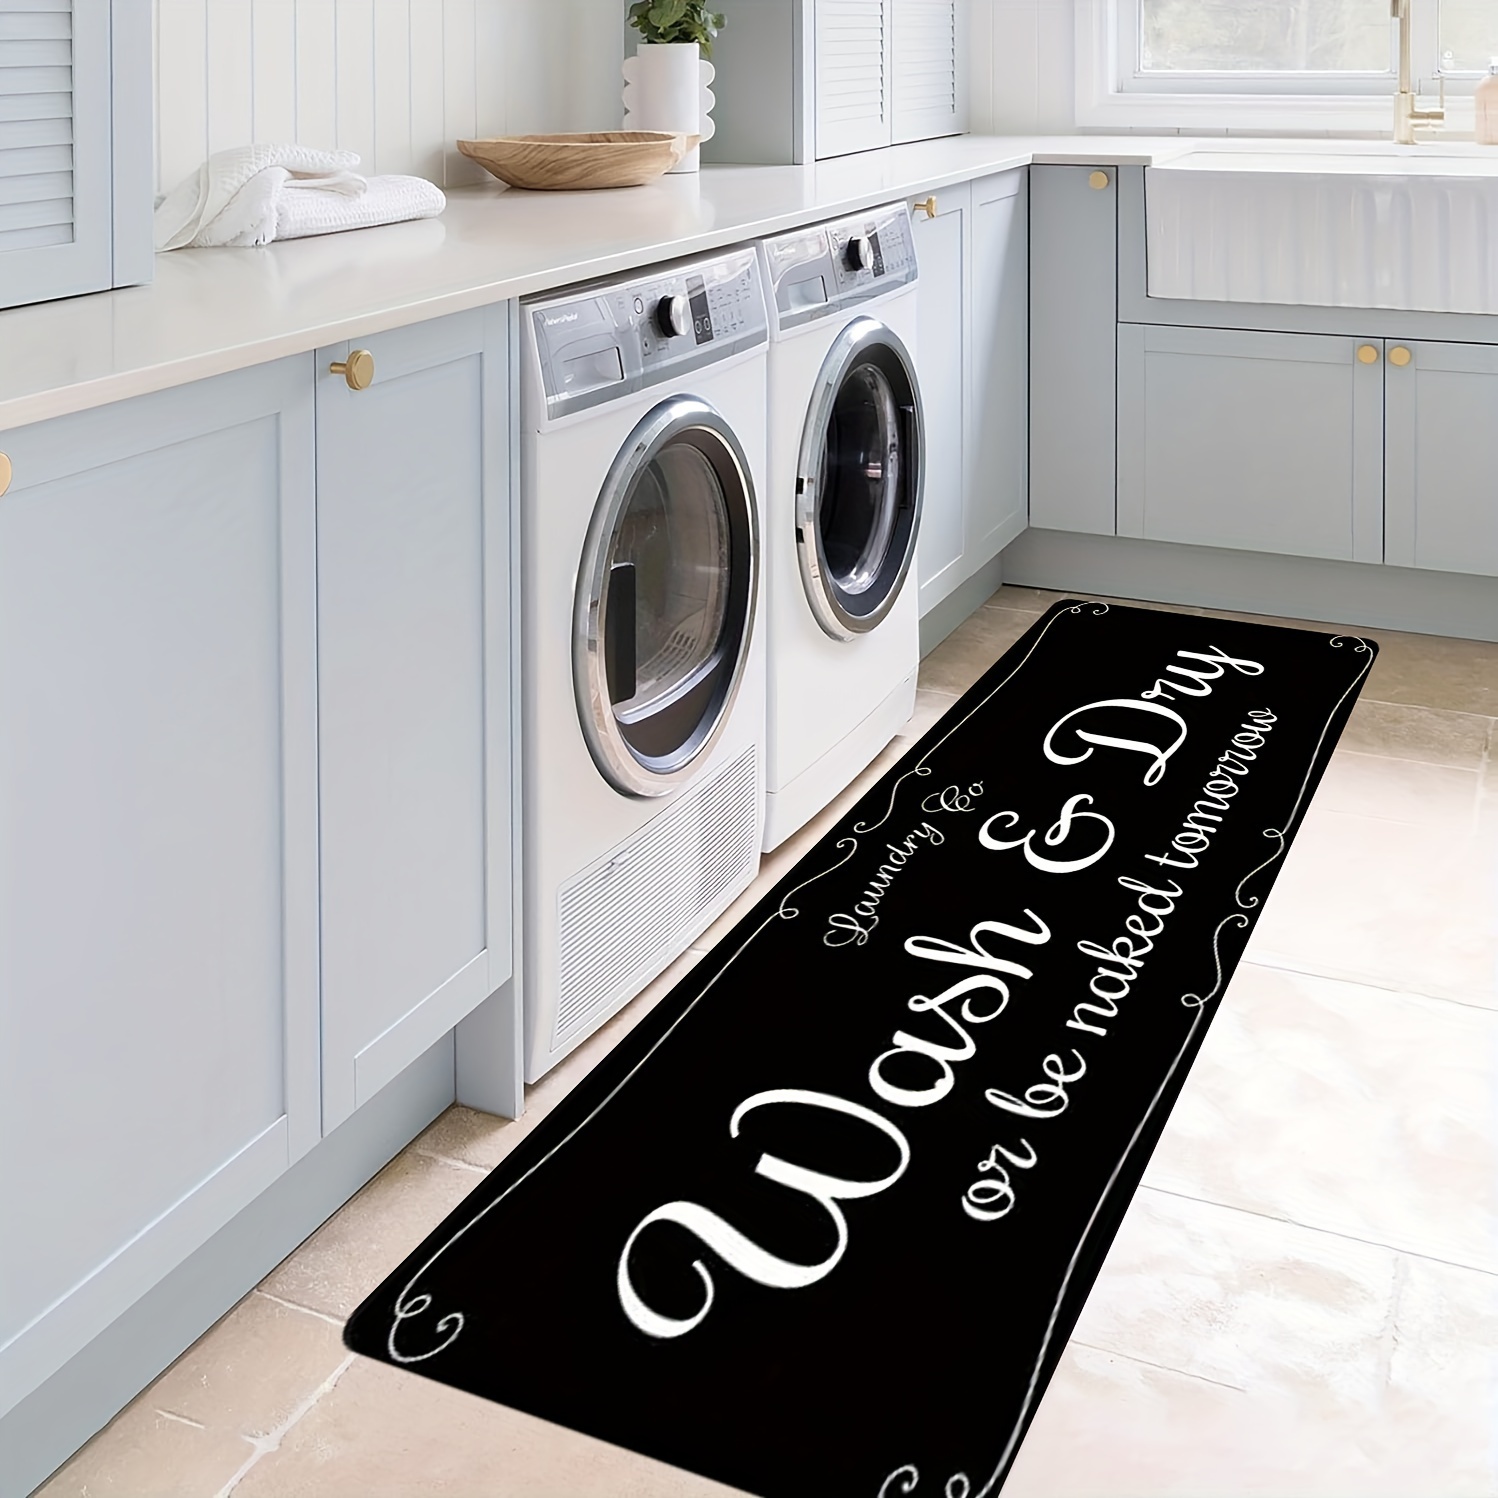 

1pc Black English Laundry Room Decorative Carpet, Printed Machine Washable Floor Mat, Soft And Comfortable - Perfect For Laundry Rooms, Hallways, Entrances, Kitchen Decoration